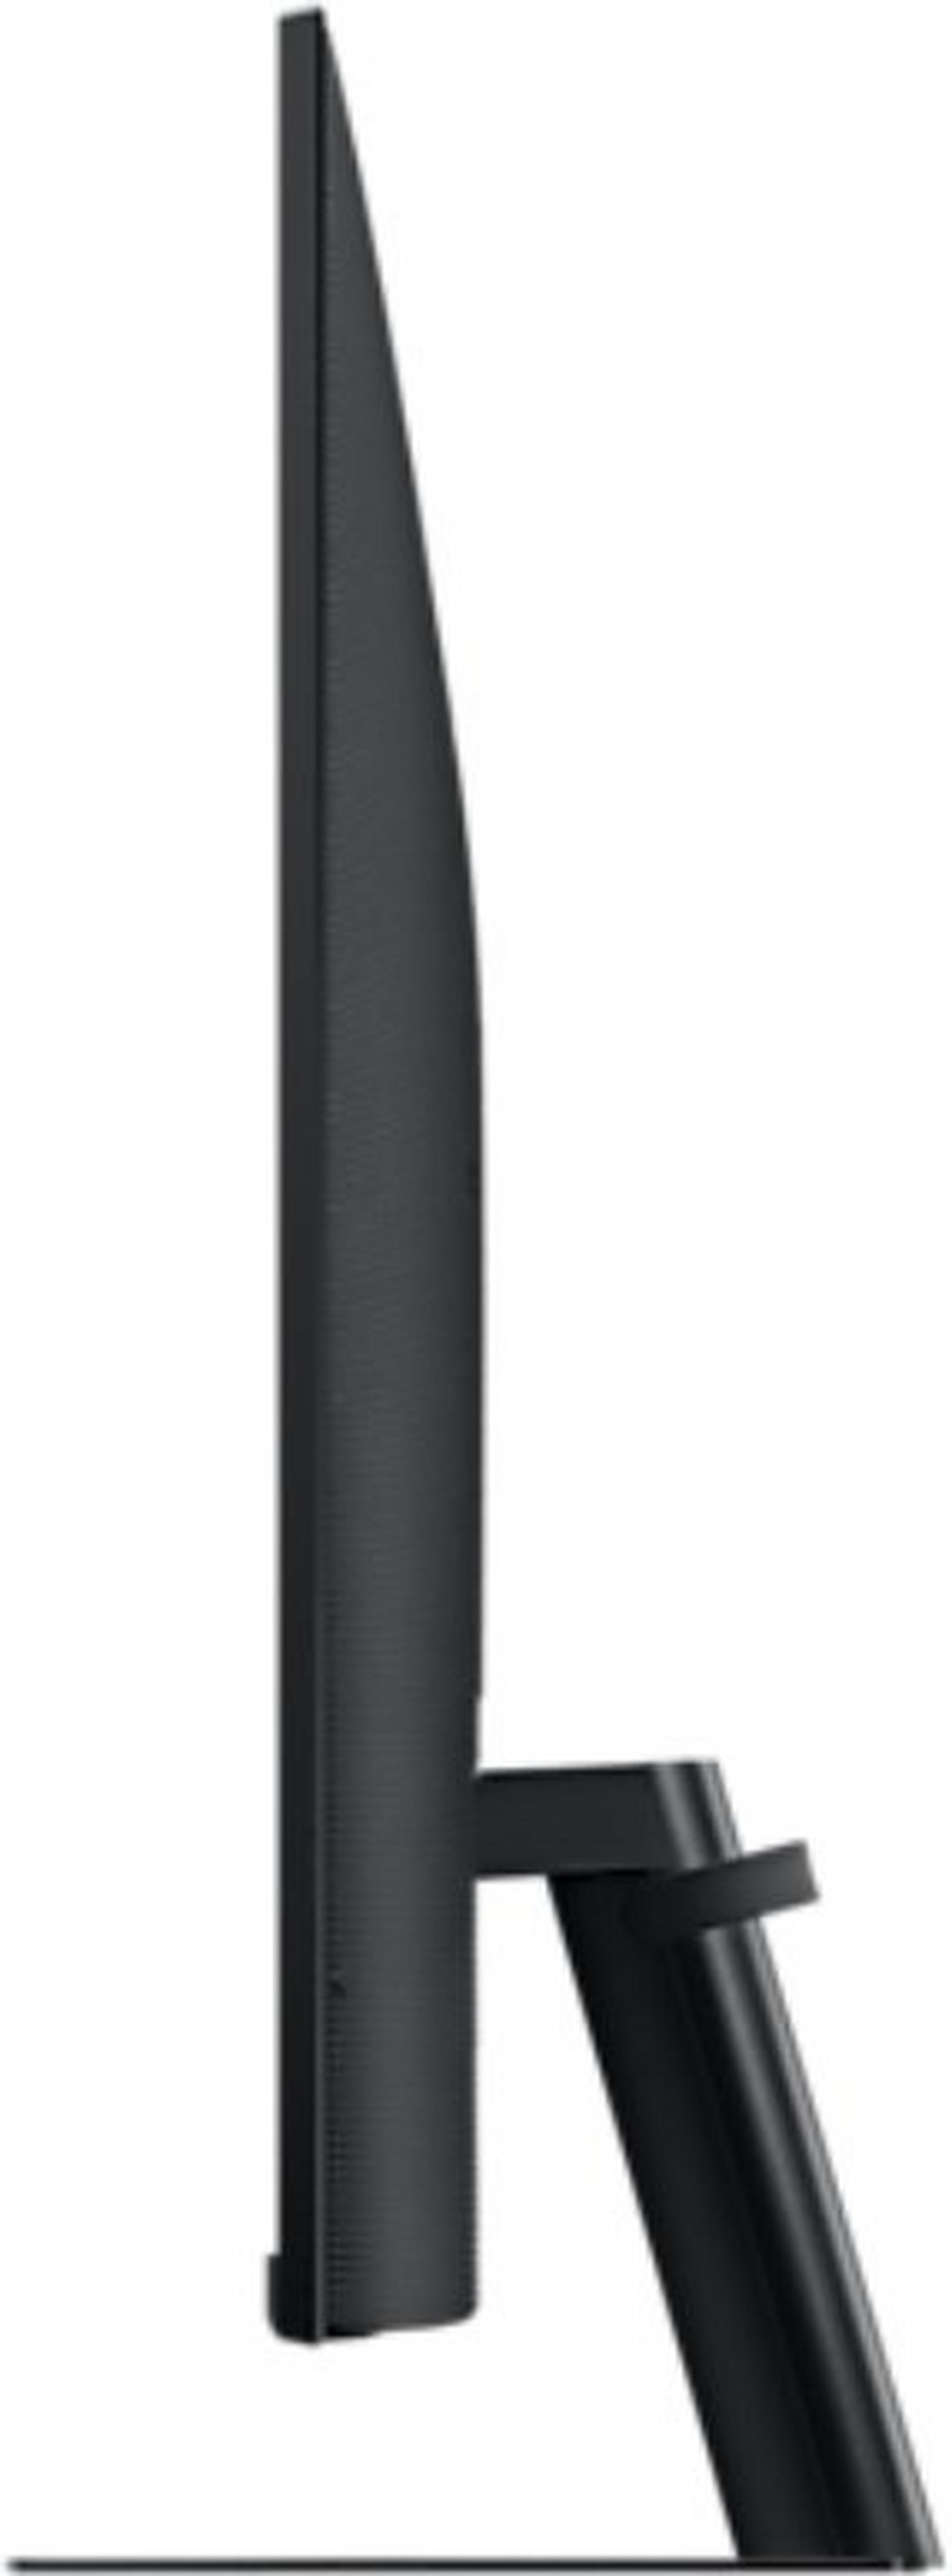 Samsung 32-inch UHD Smart Monitor | Xcite Kuwait